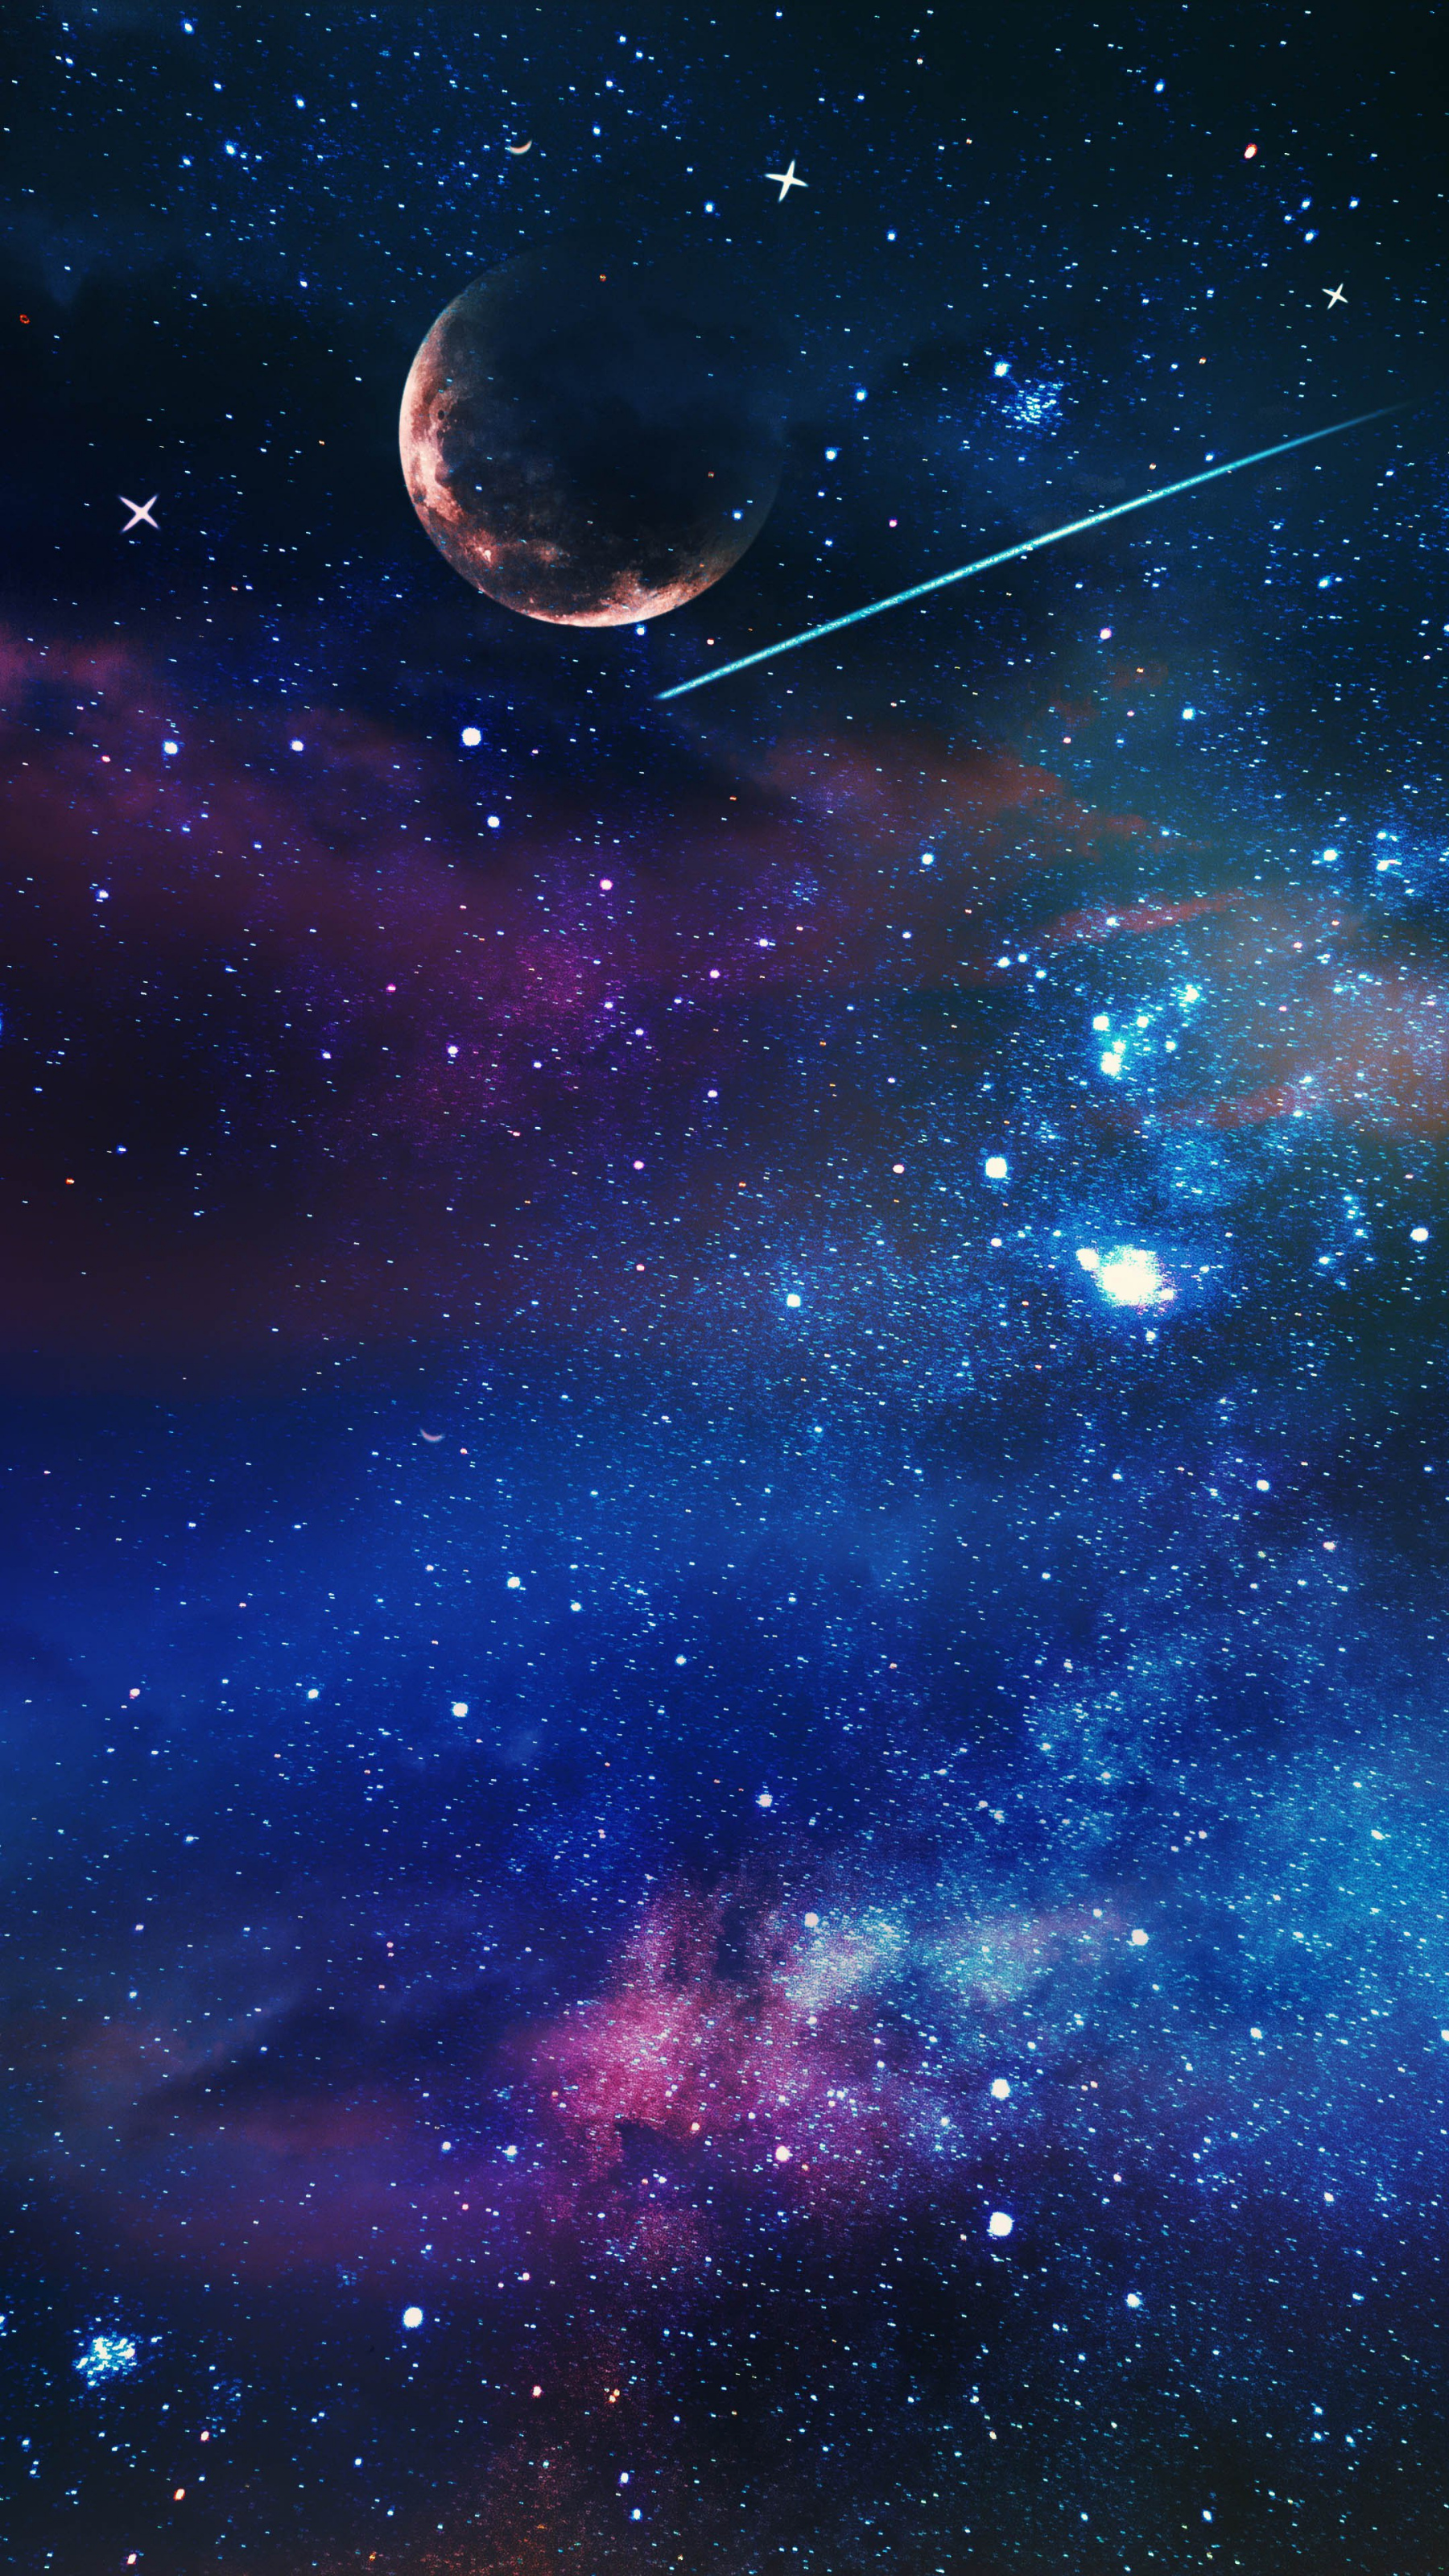 Download free HD wallpaper from above link night summer stars space  planet b  Fondos de pantalla de iphone Ideas de fondos de pantalla  Fpndos de pantalla